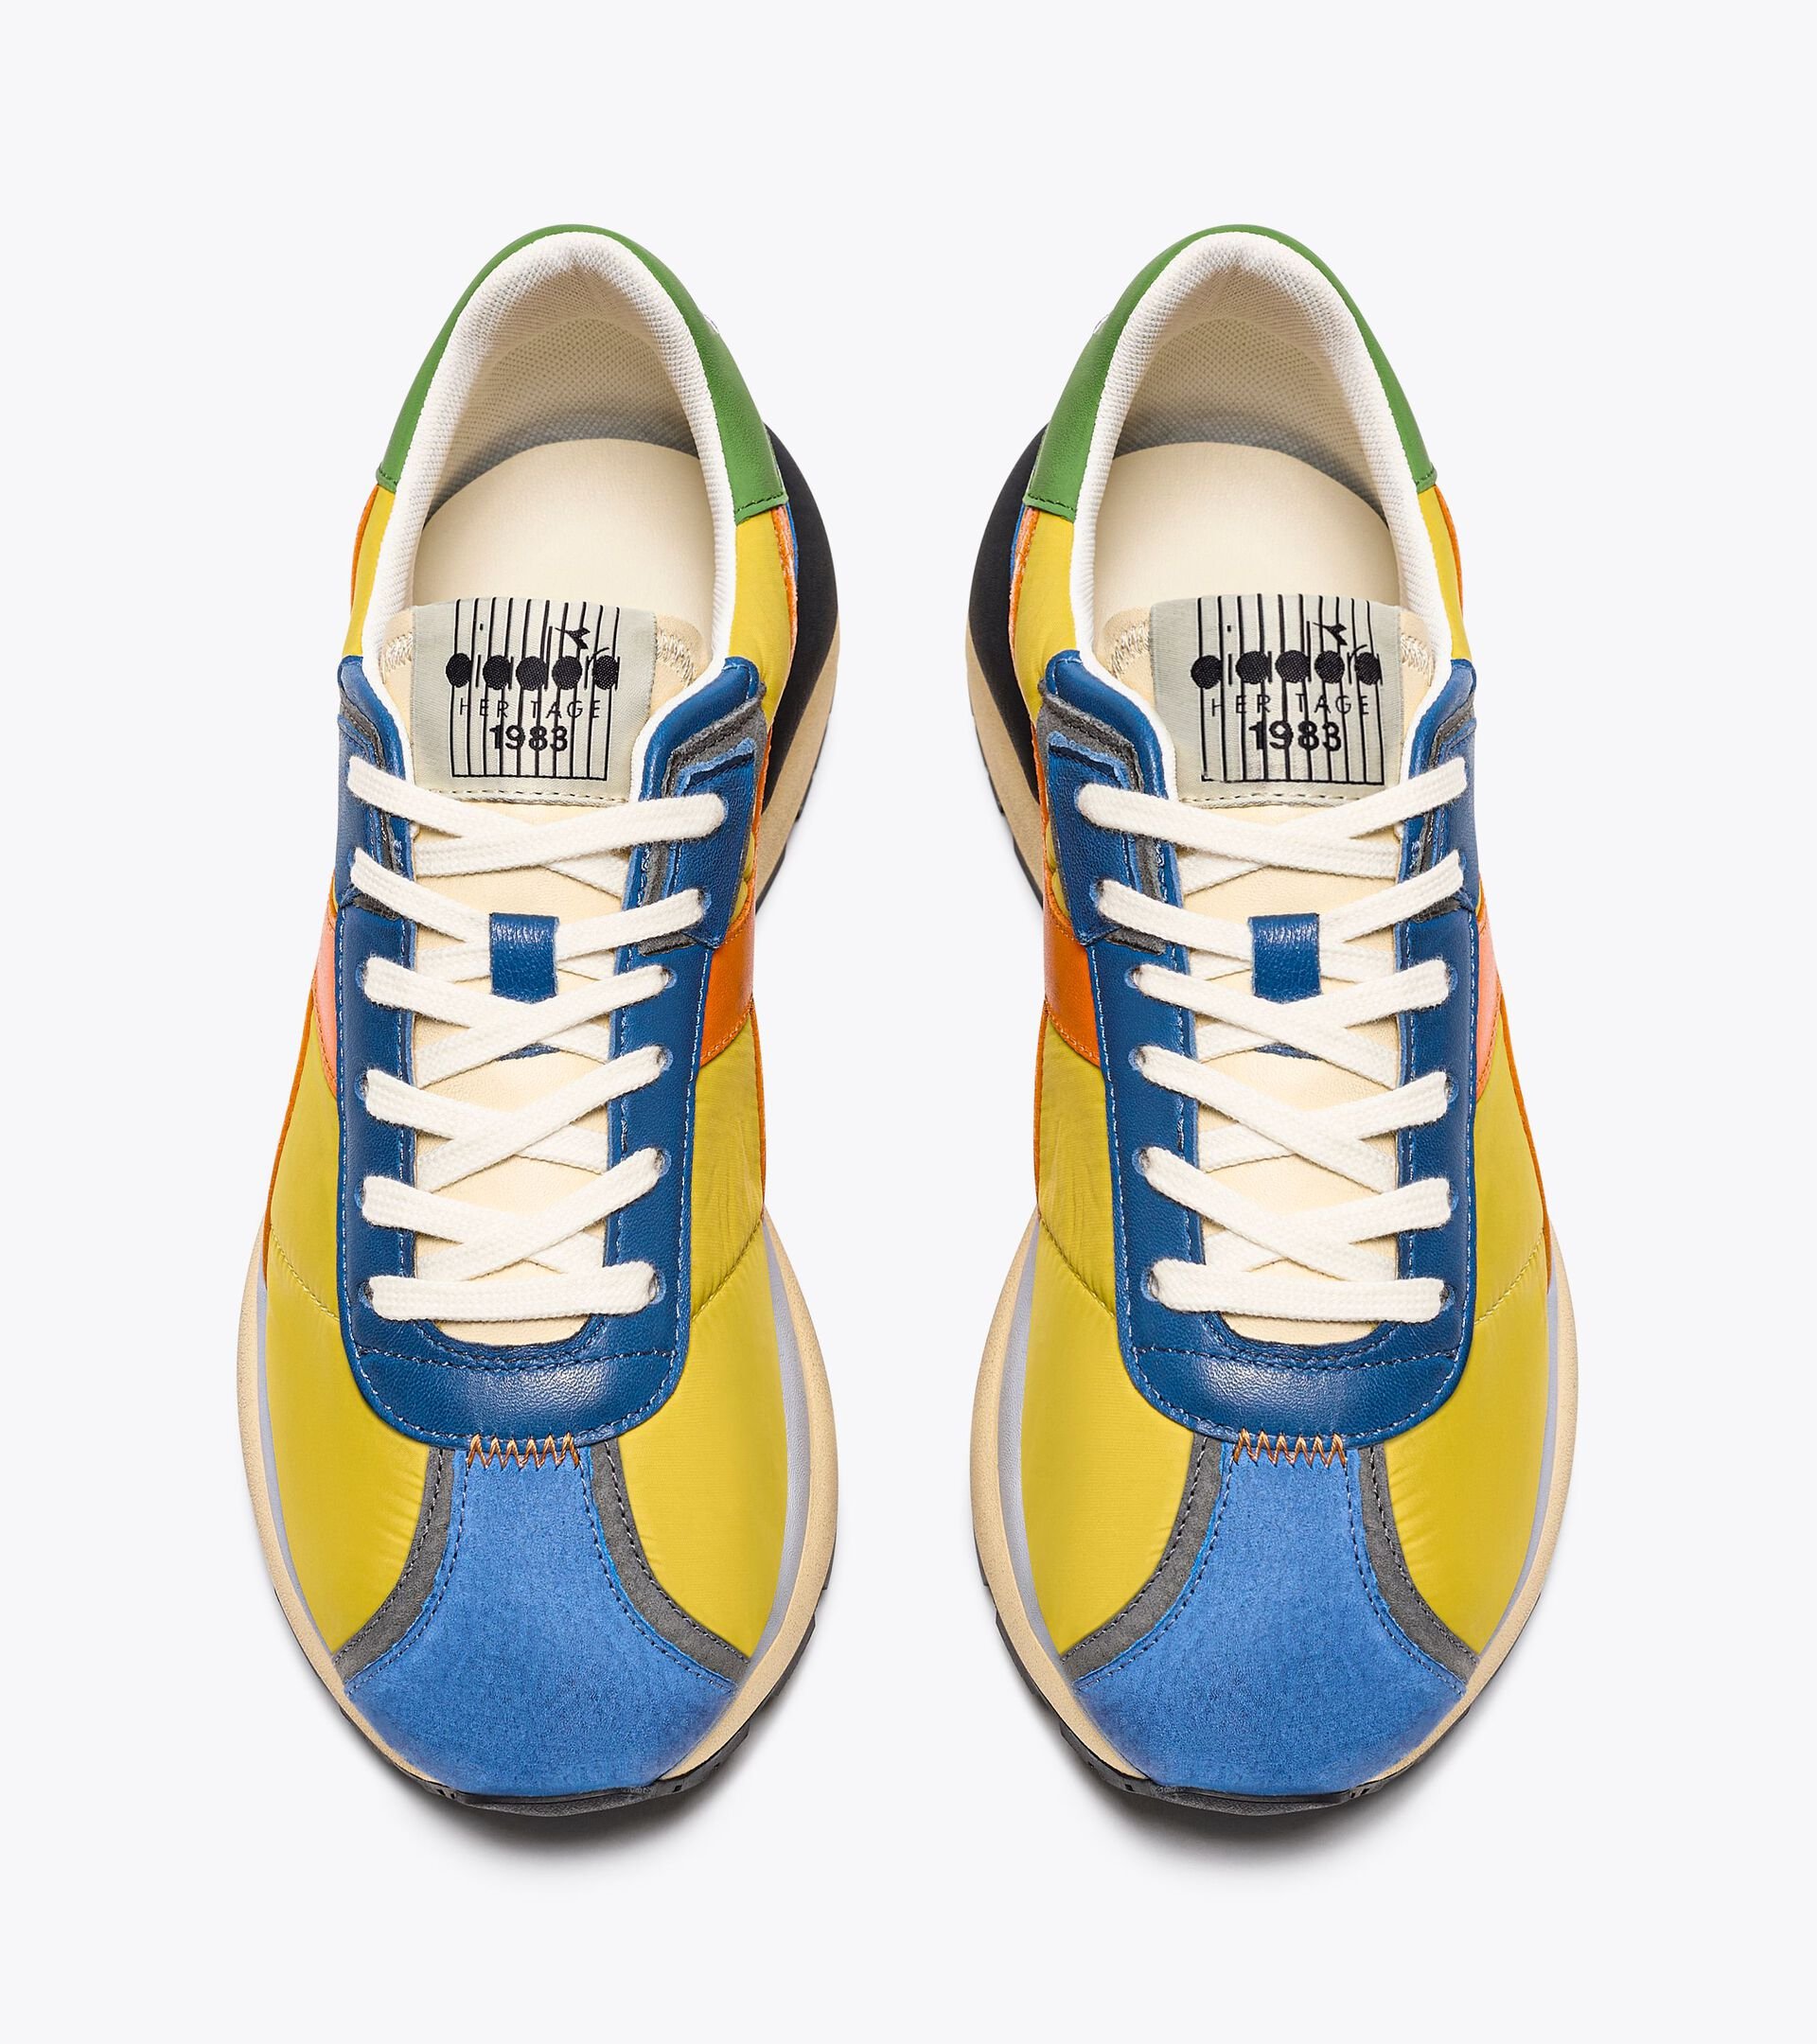 Heritage sneaker - Gender Neutral MERCURY ELITE YELLOW OLD GOLD - Diadora